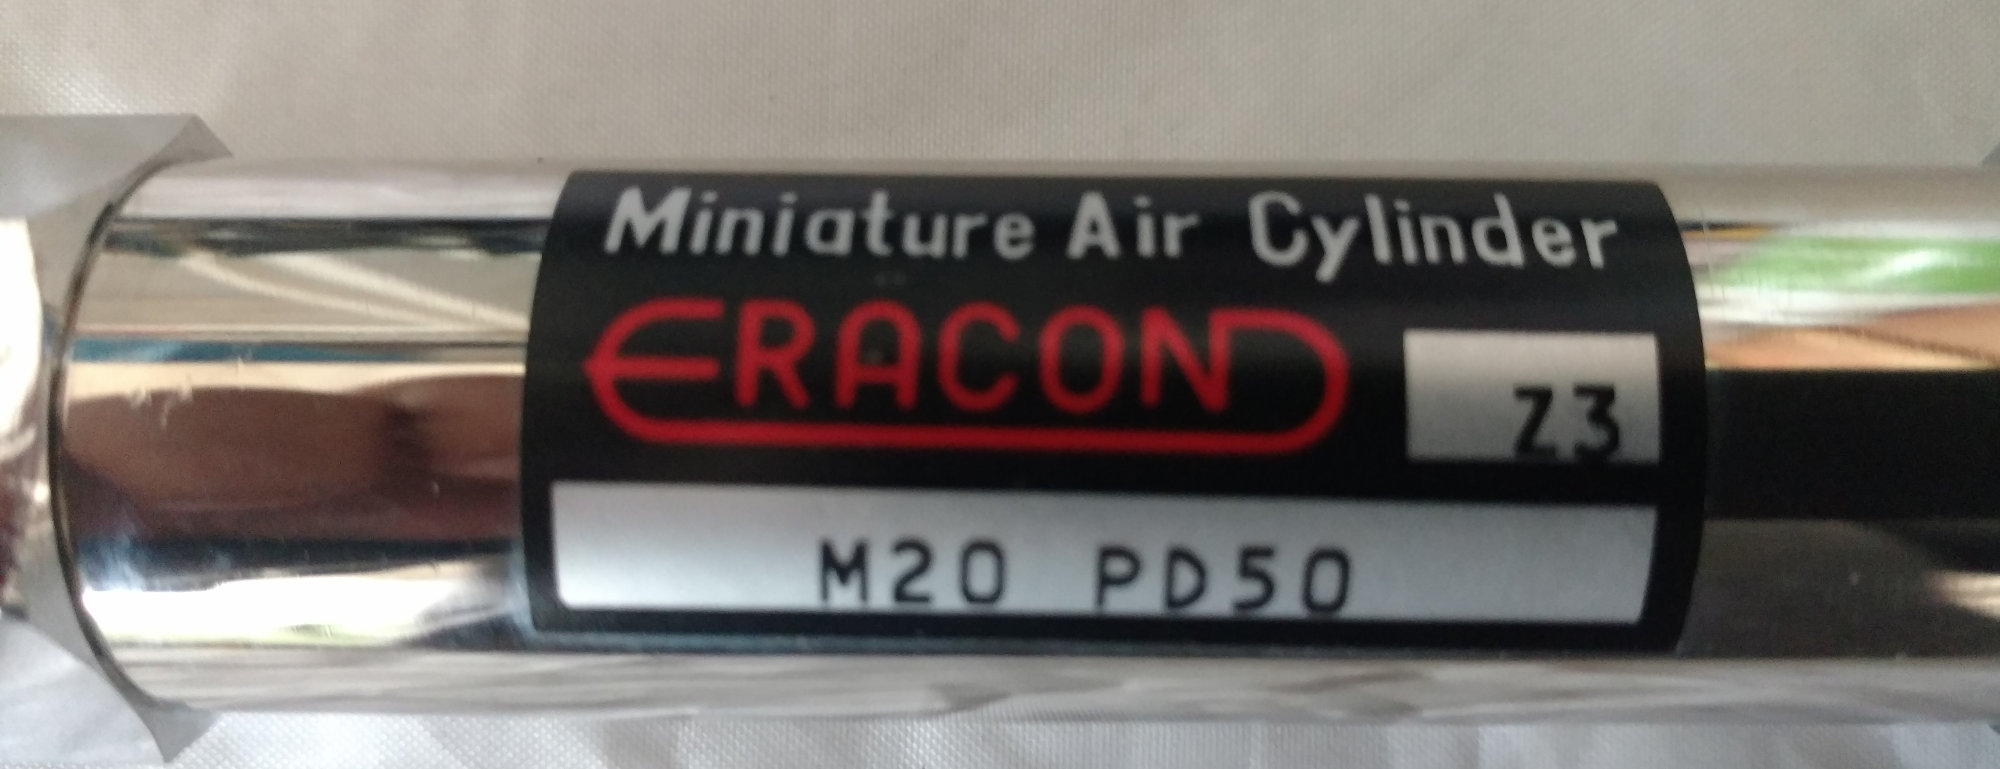 ERACOND Z3 M20 PD 50